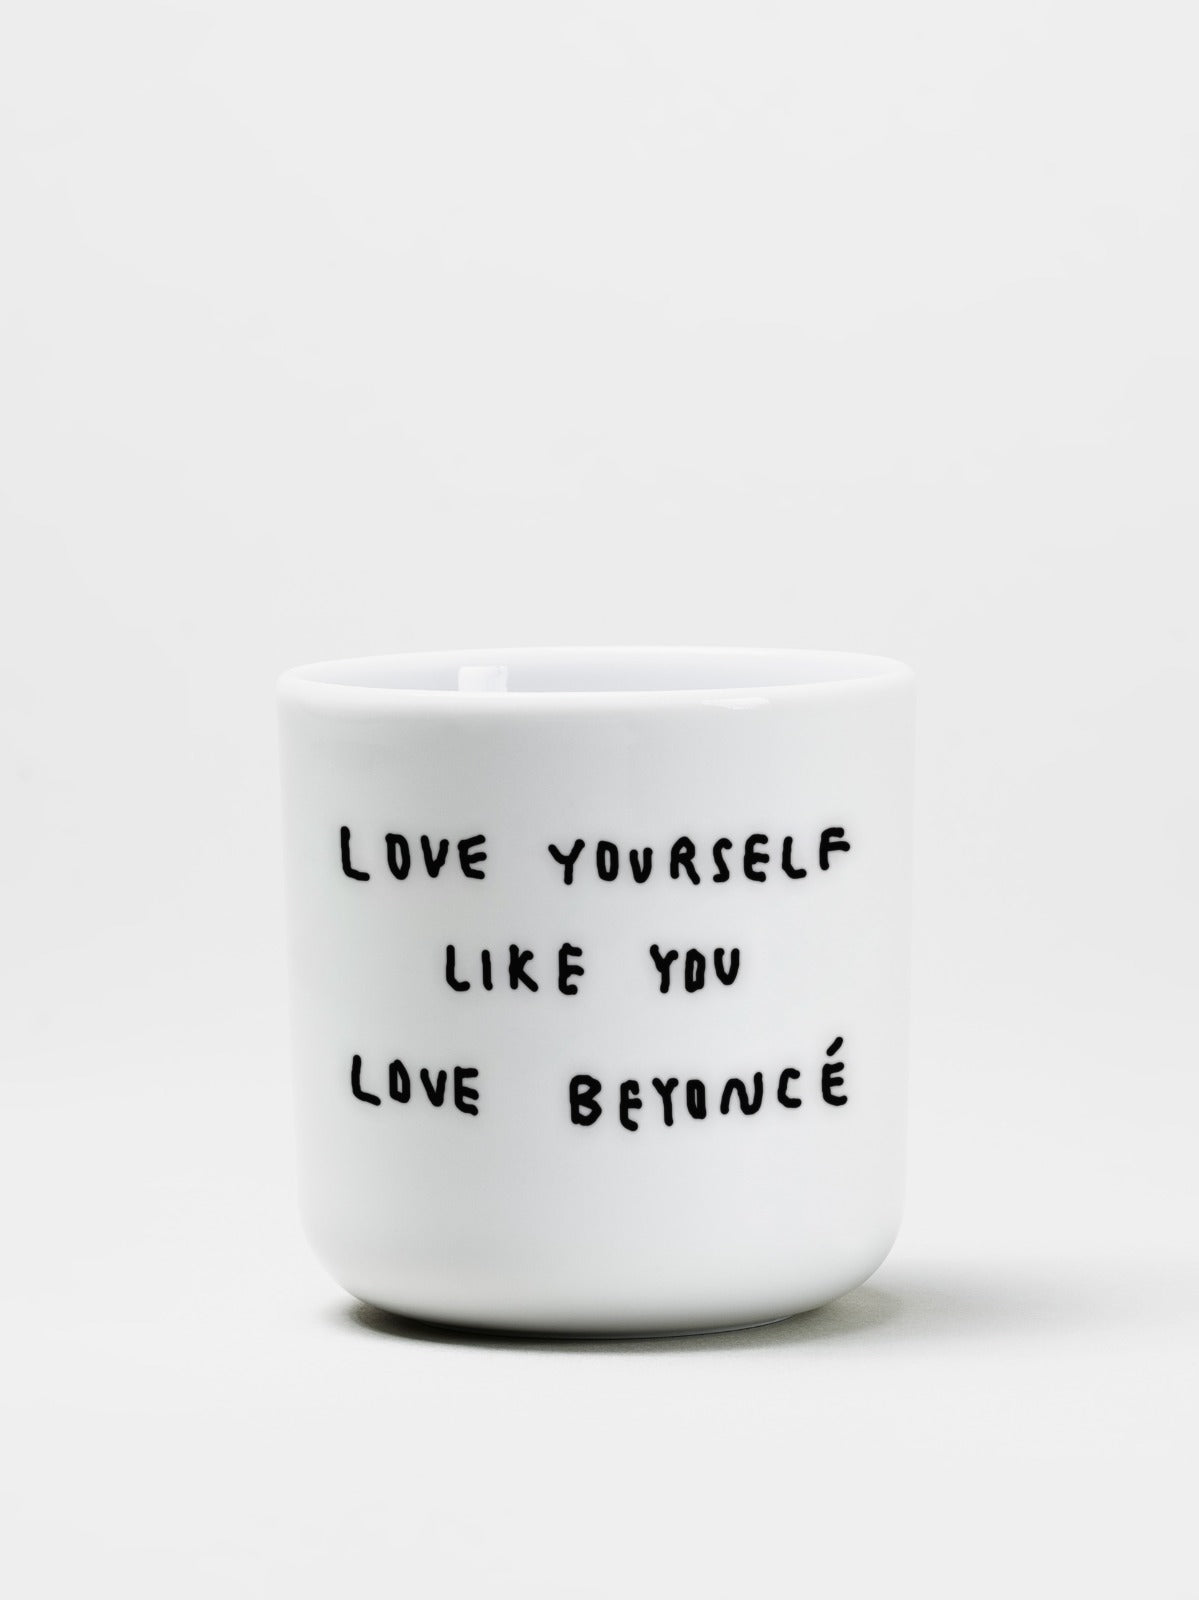 love yourself like you love beyoncé - yahya.